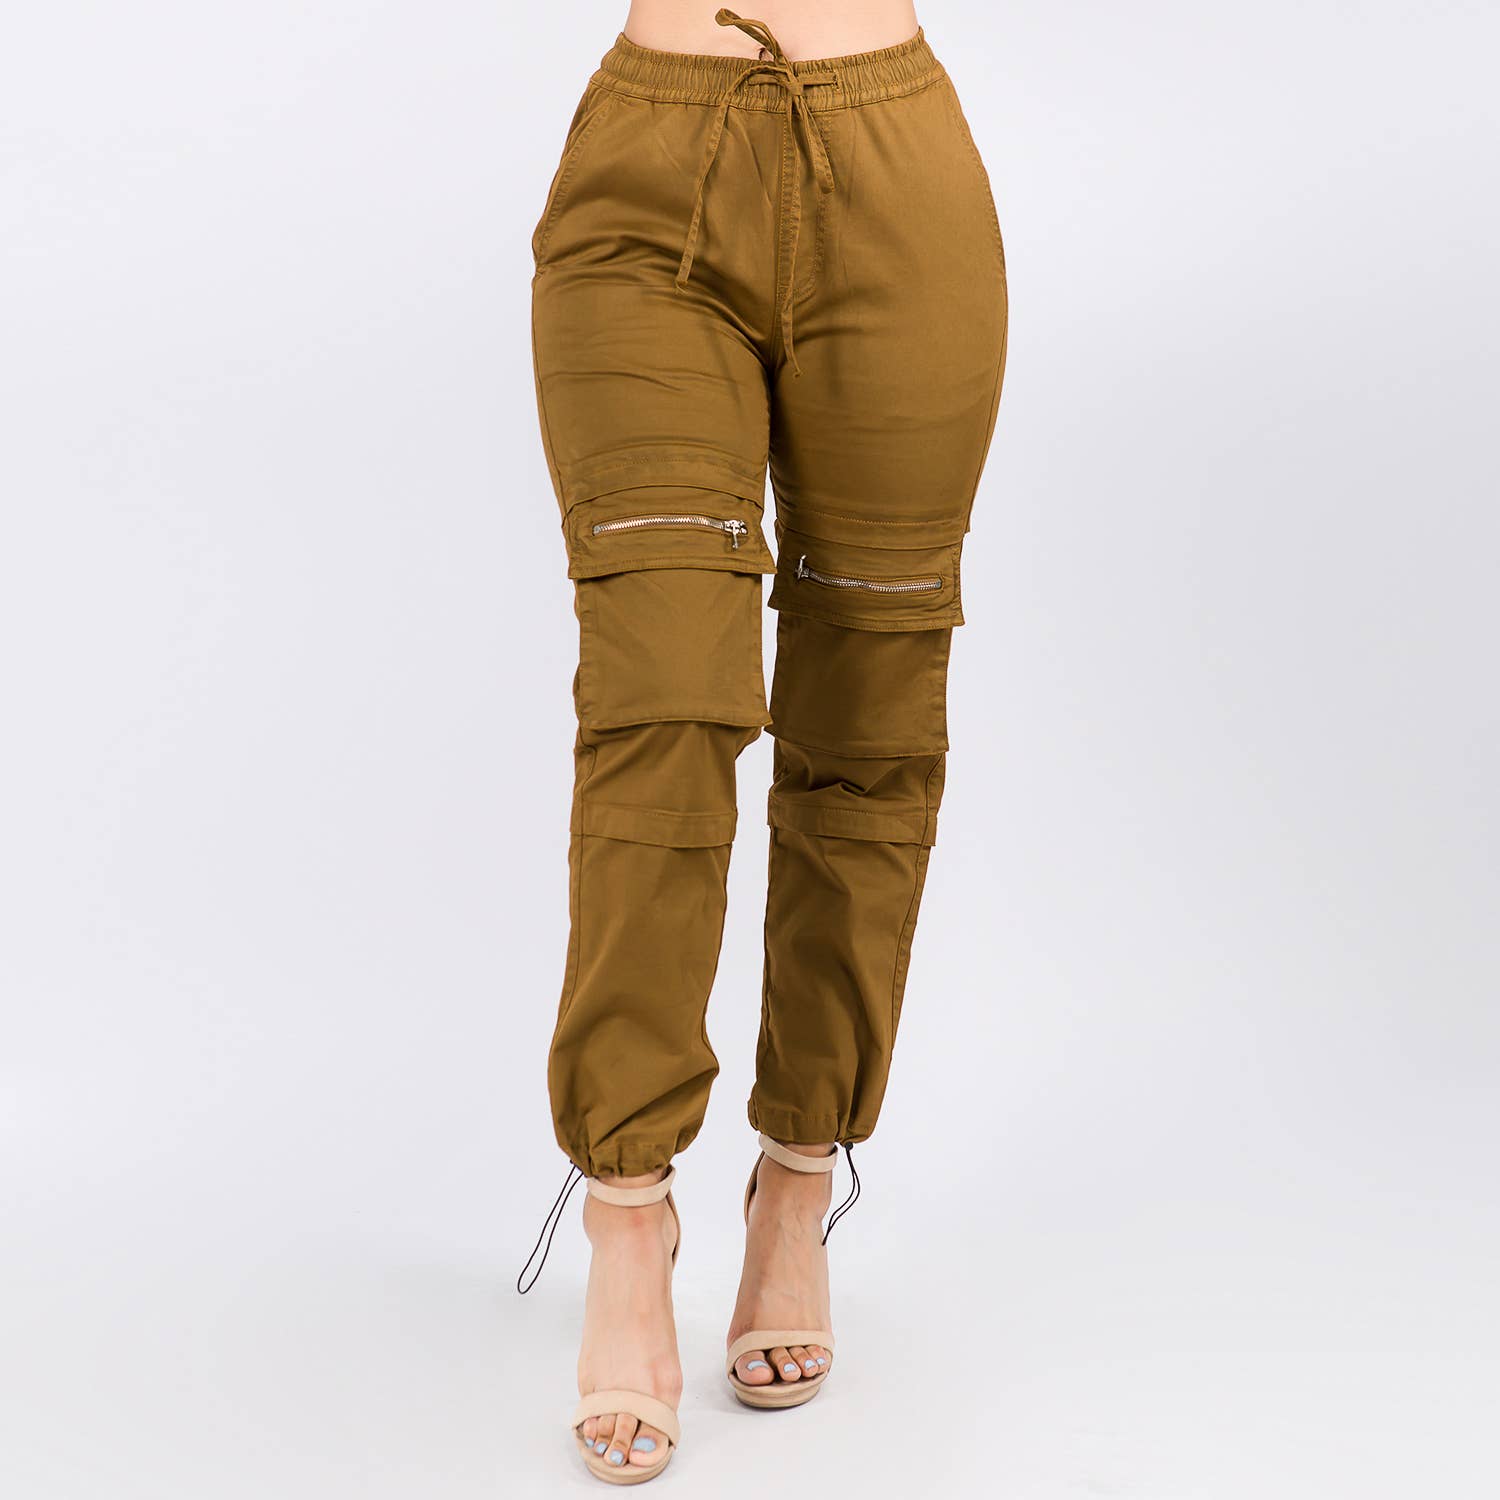 Yvette Womens Jogger Pants Cuffed High Waist Sweatpants Tracksuit Bottoms with Zipper Pockets 